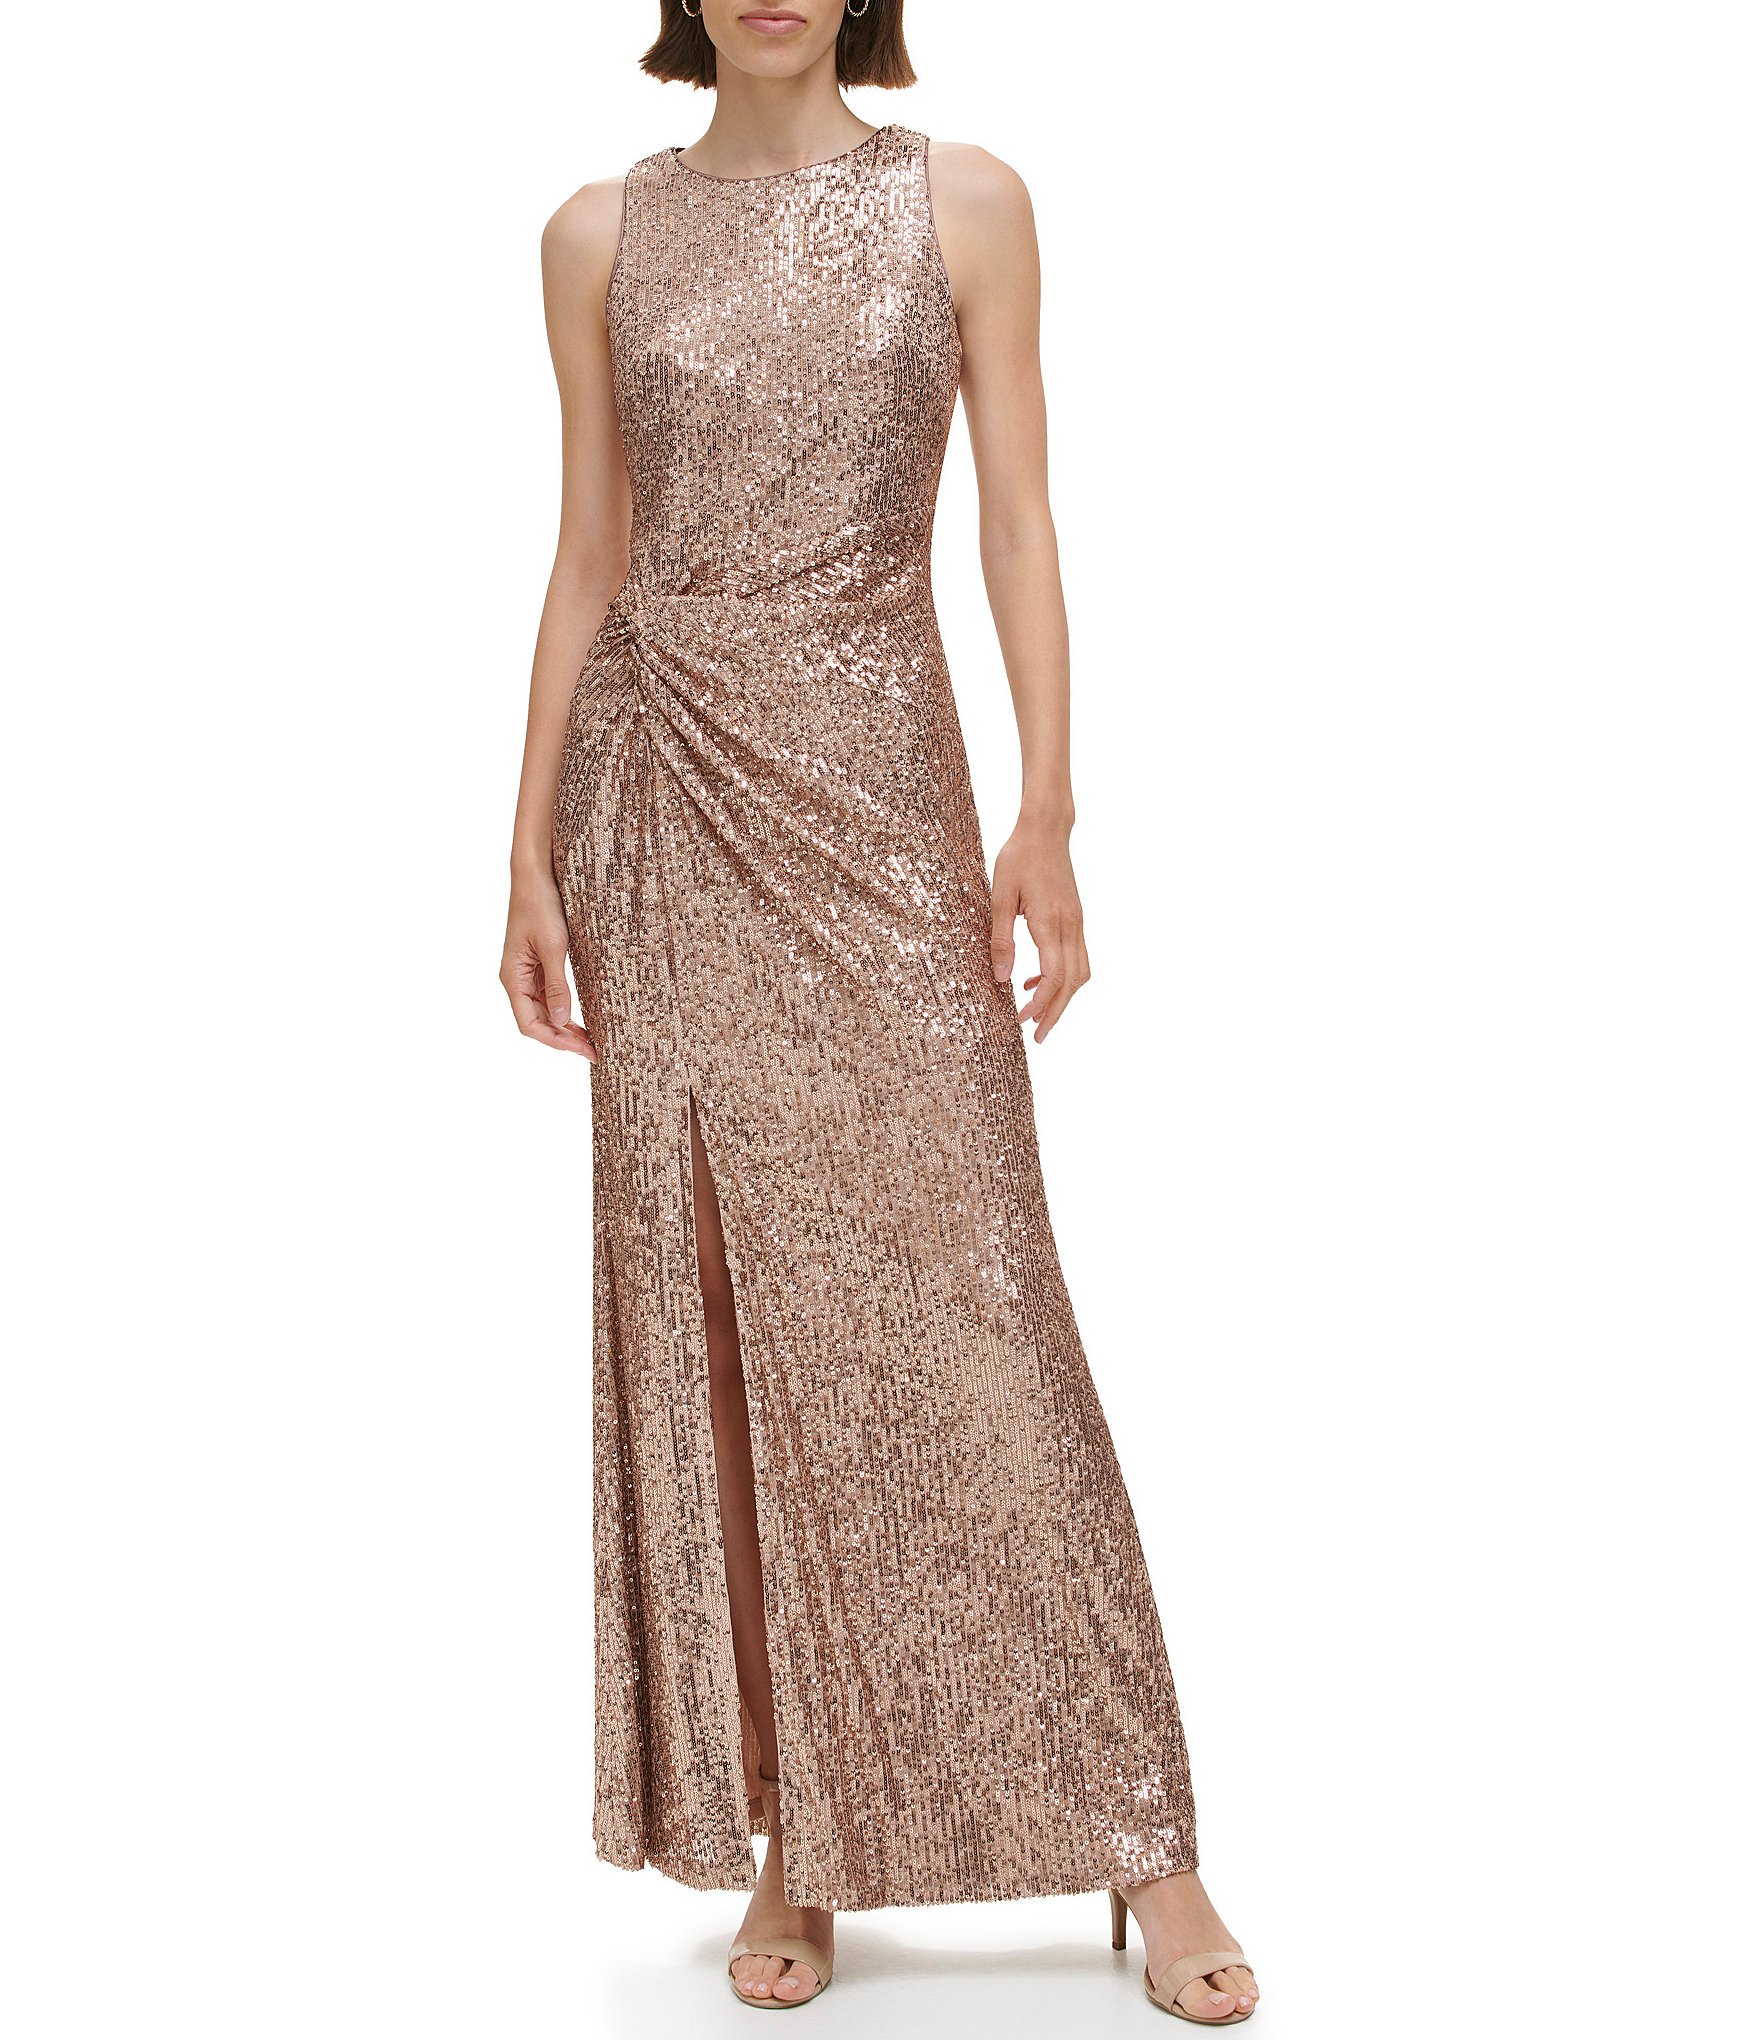 Clearance Tan Women's Formal Dresses & Evening Gowns | Dillard's